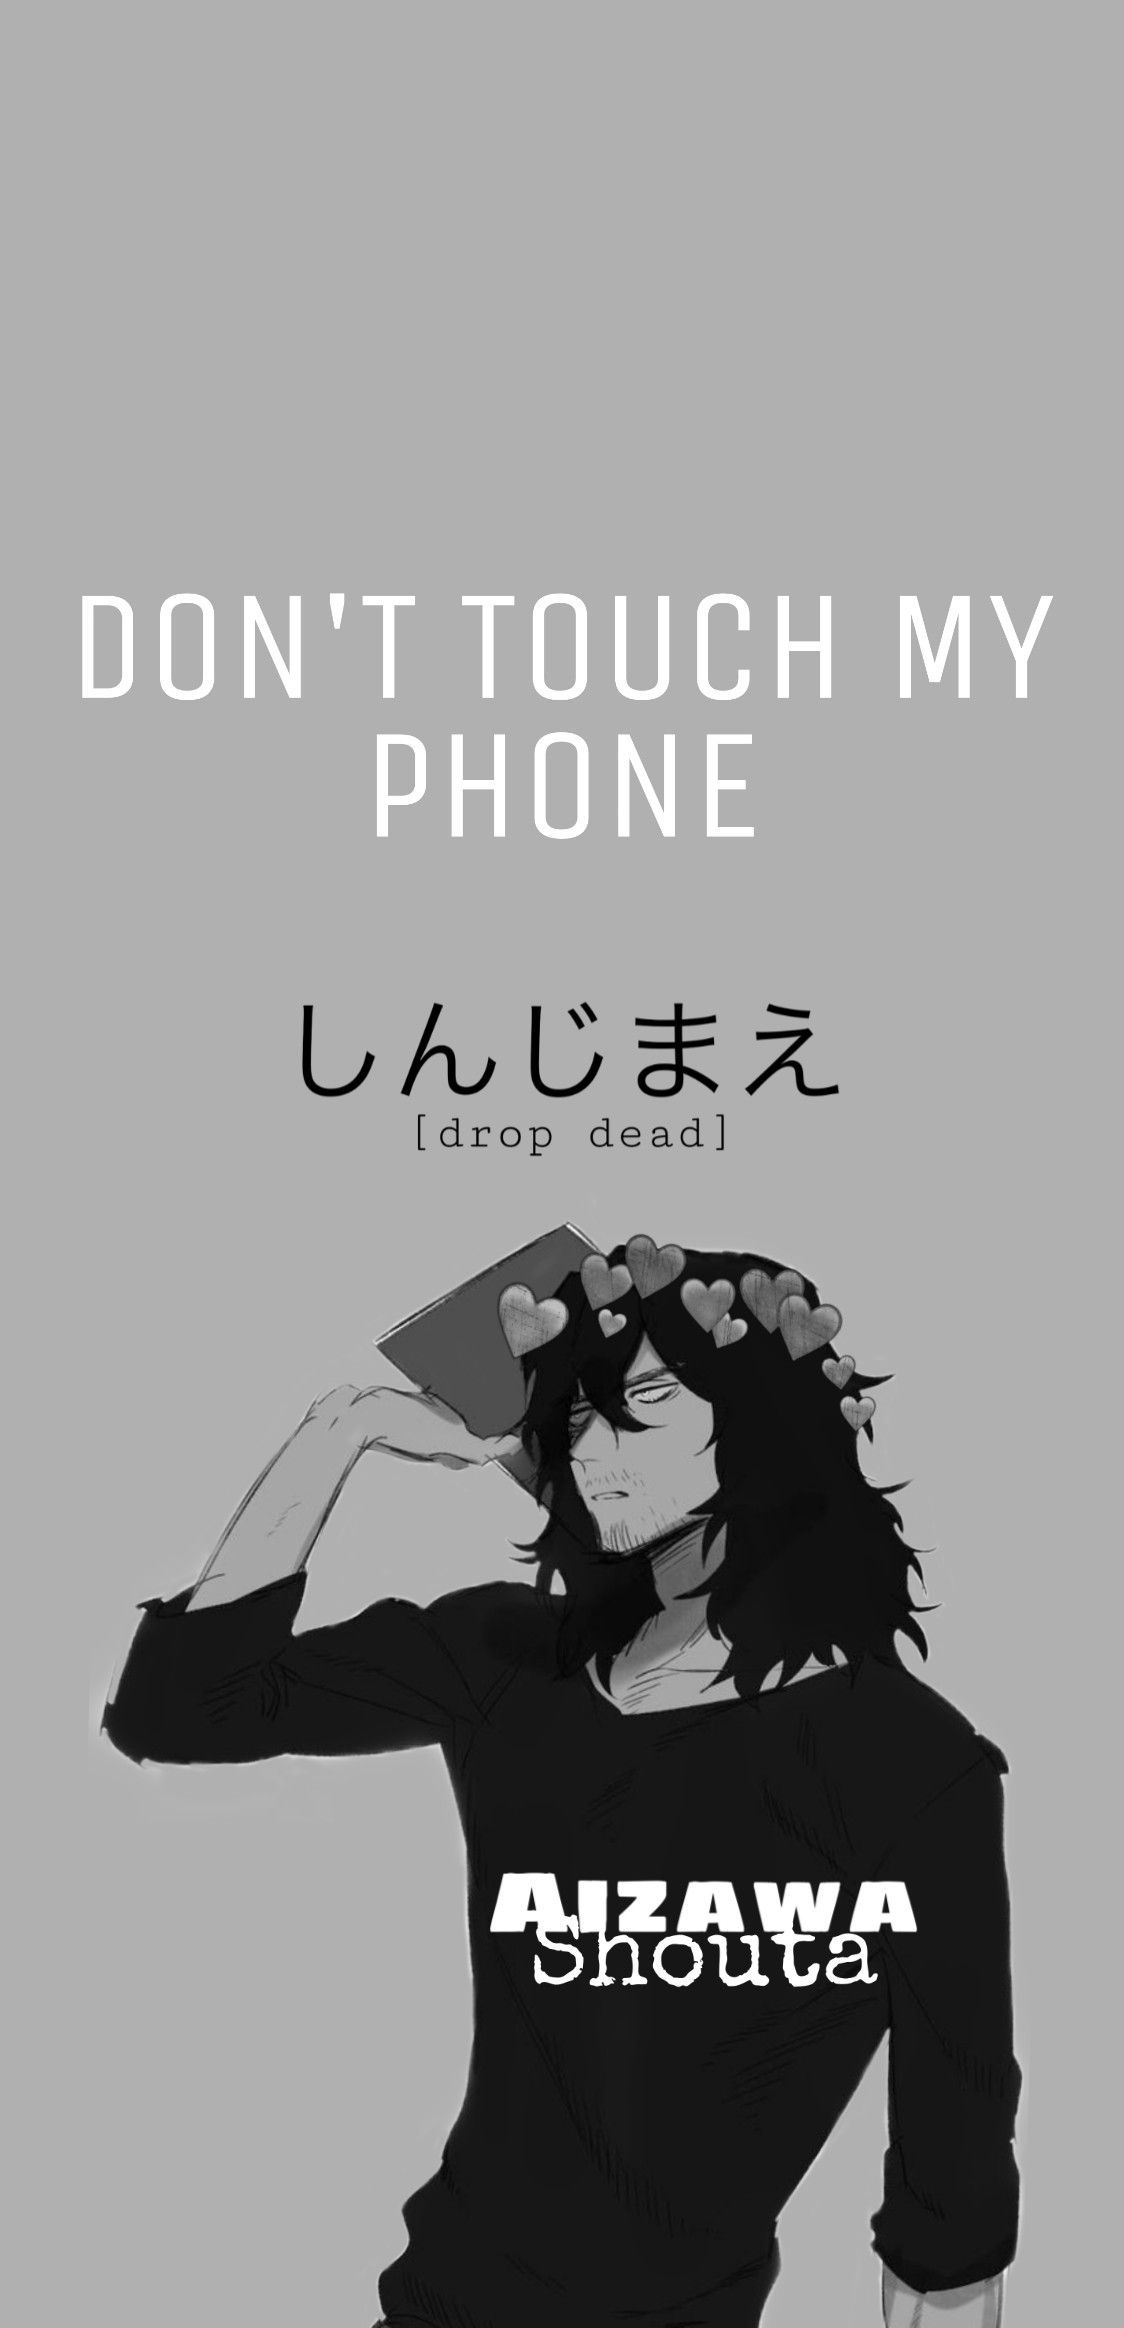 Aizawa shouta wallpaper. Dont touch my phone anime, Anime lock screen wallpaper, Anime background wallpaper